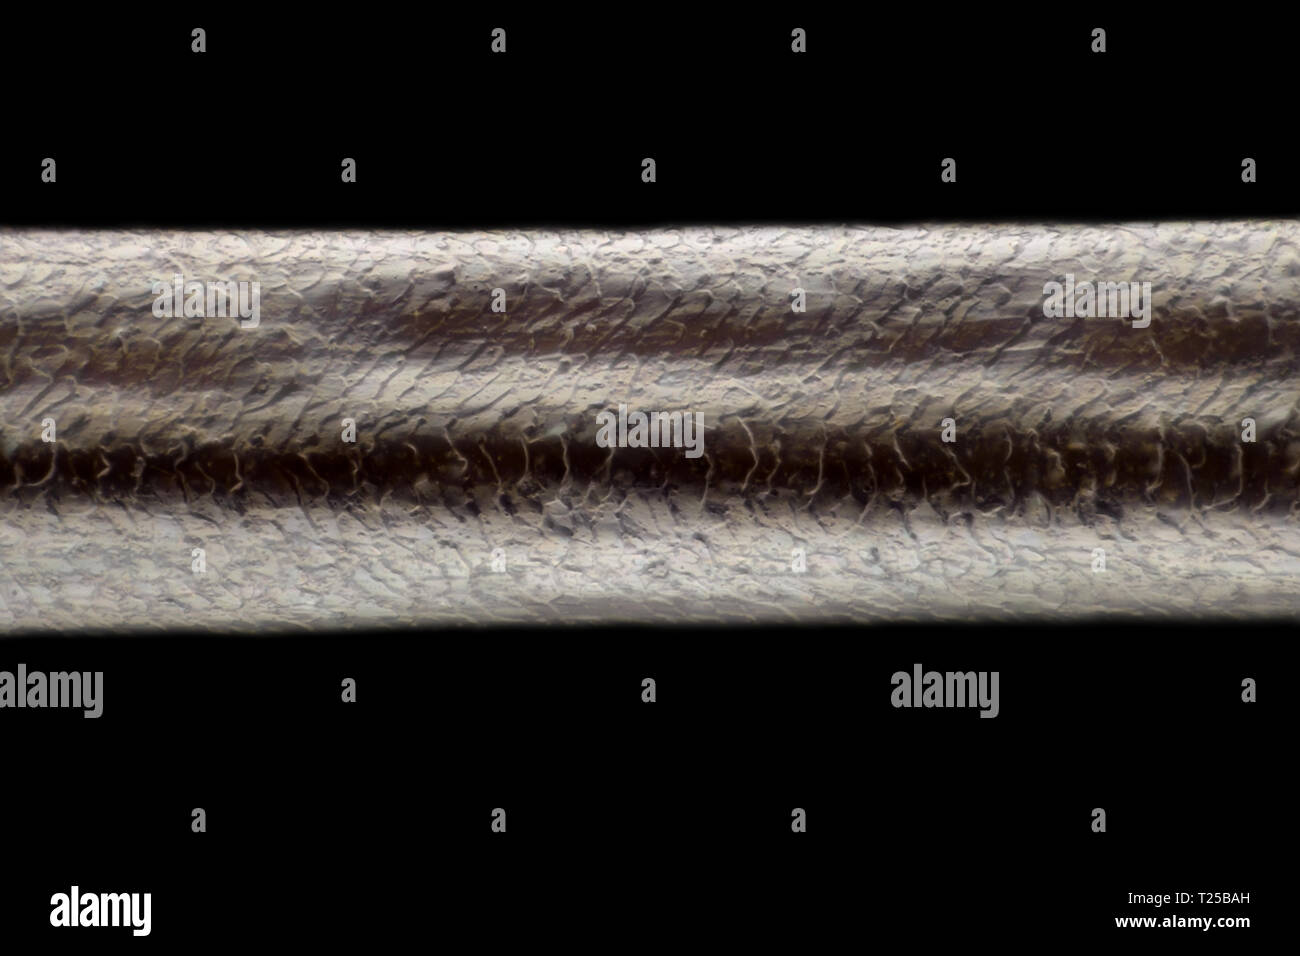 Extreme ingrandimento - capelli umani al microscopio, ingrandimento 100x Foto Stock